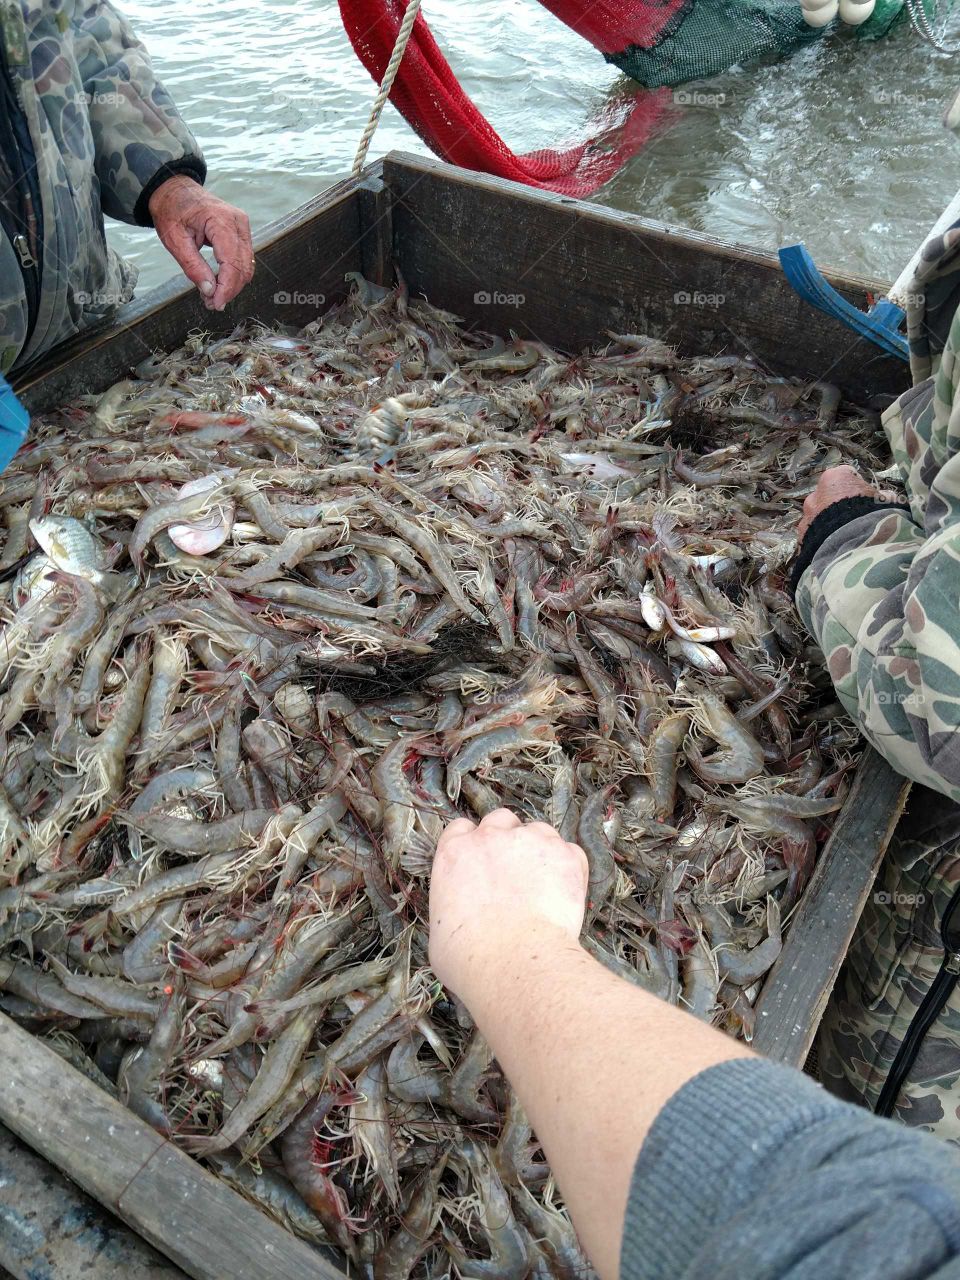 Shrimping

shrimping